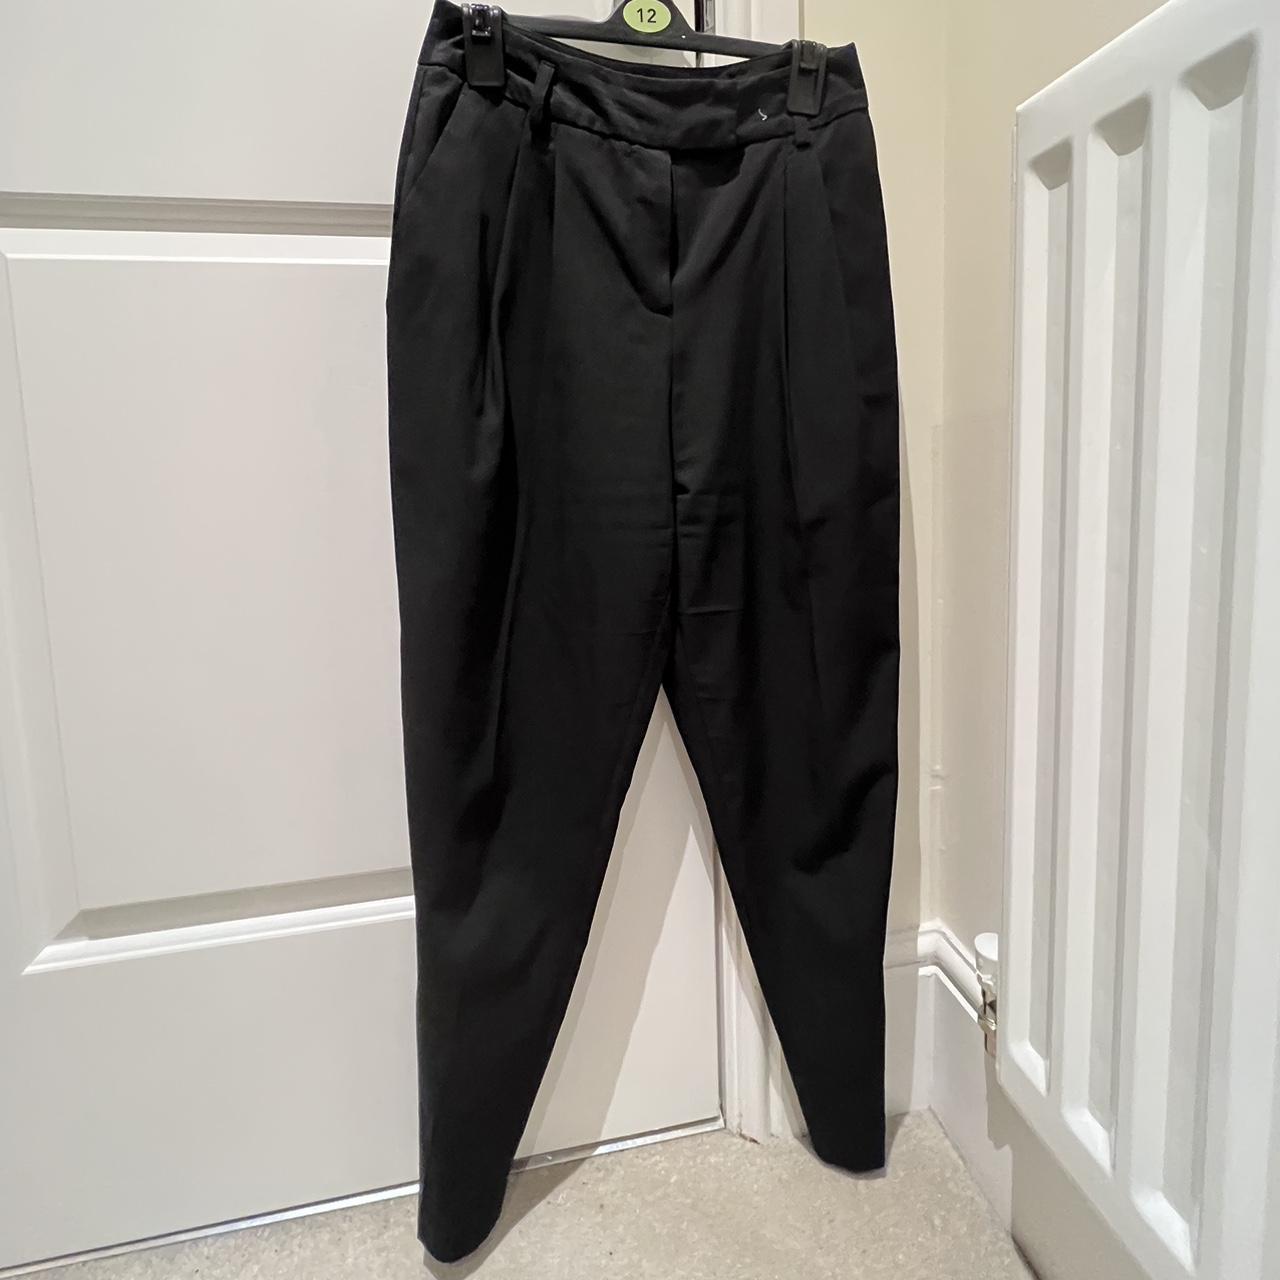 girls School black trousers ,size UK 6,Primark,very good condition | eBay